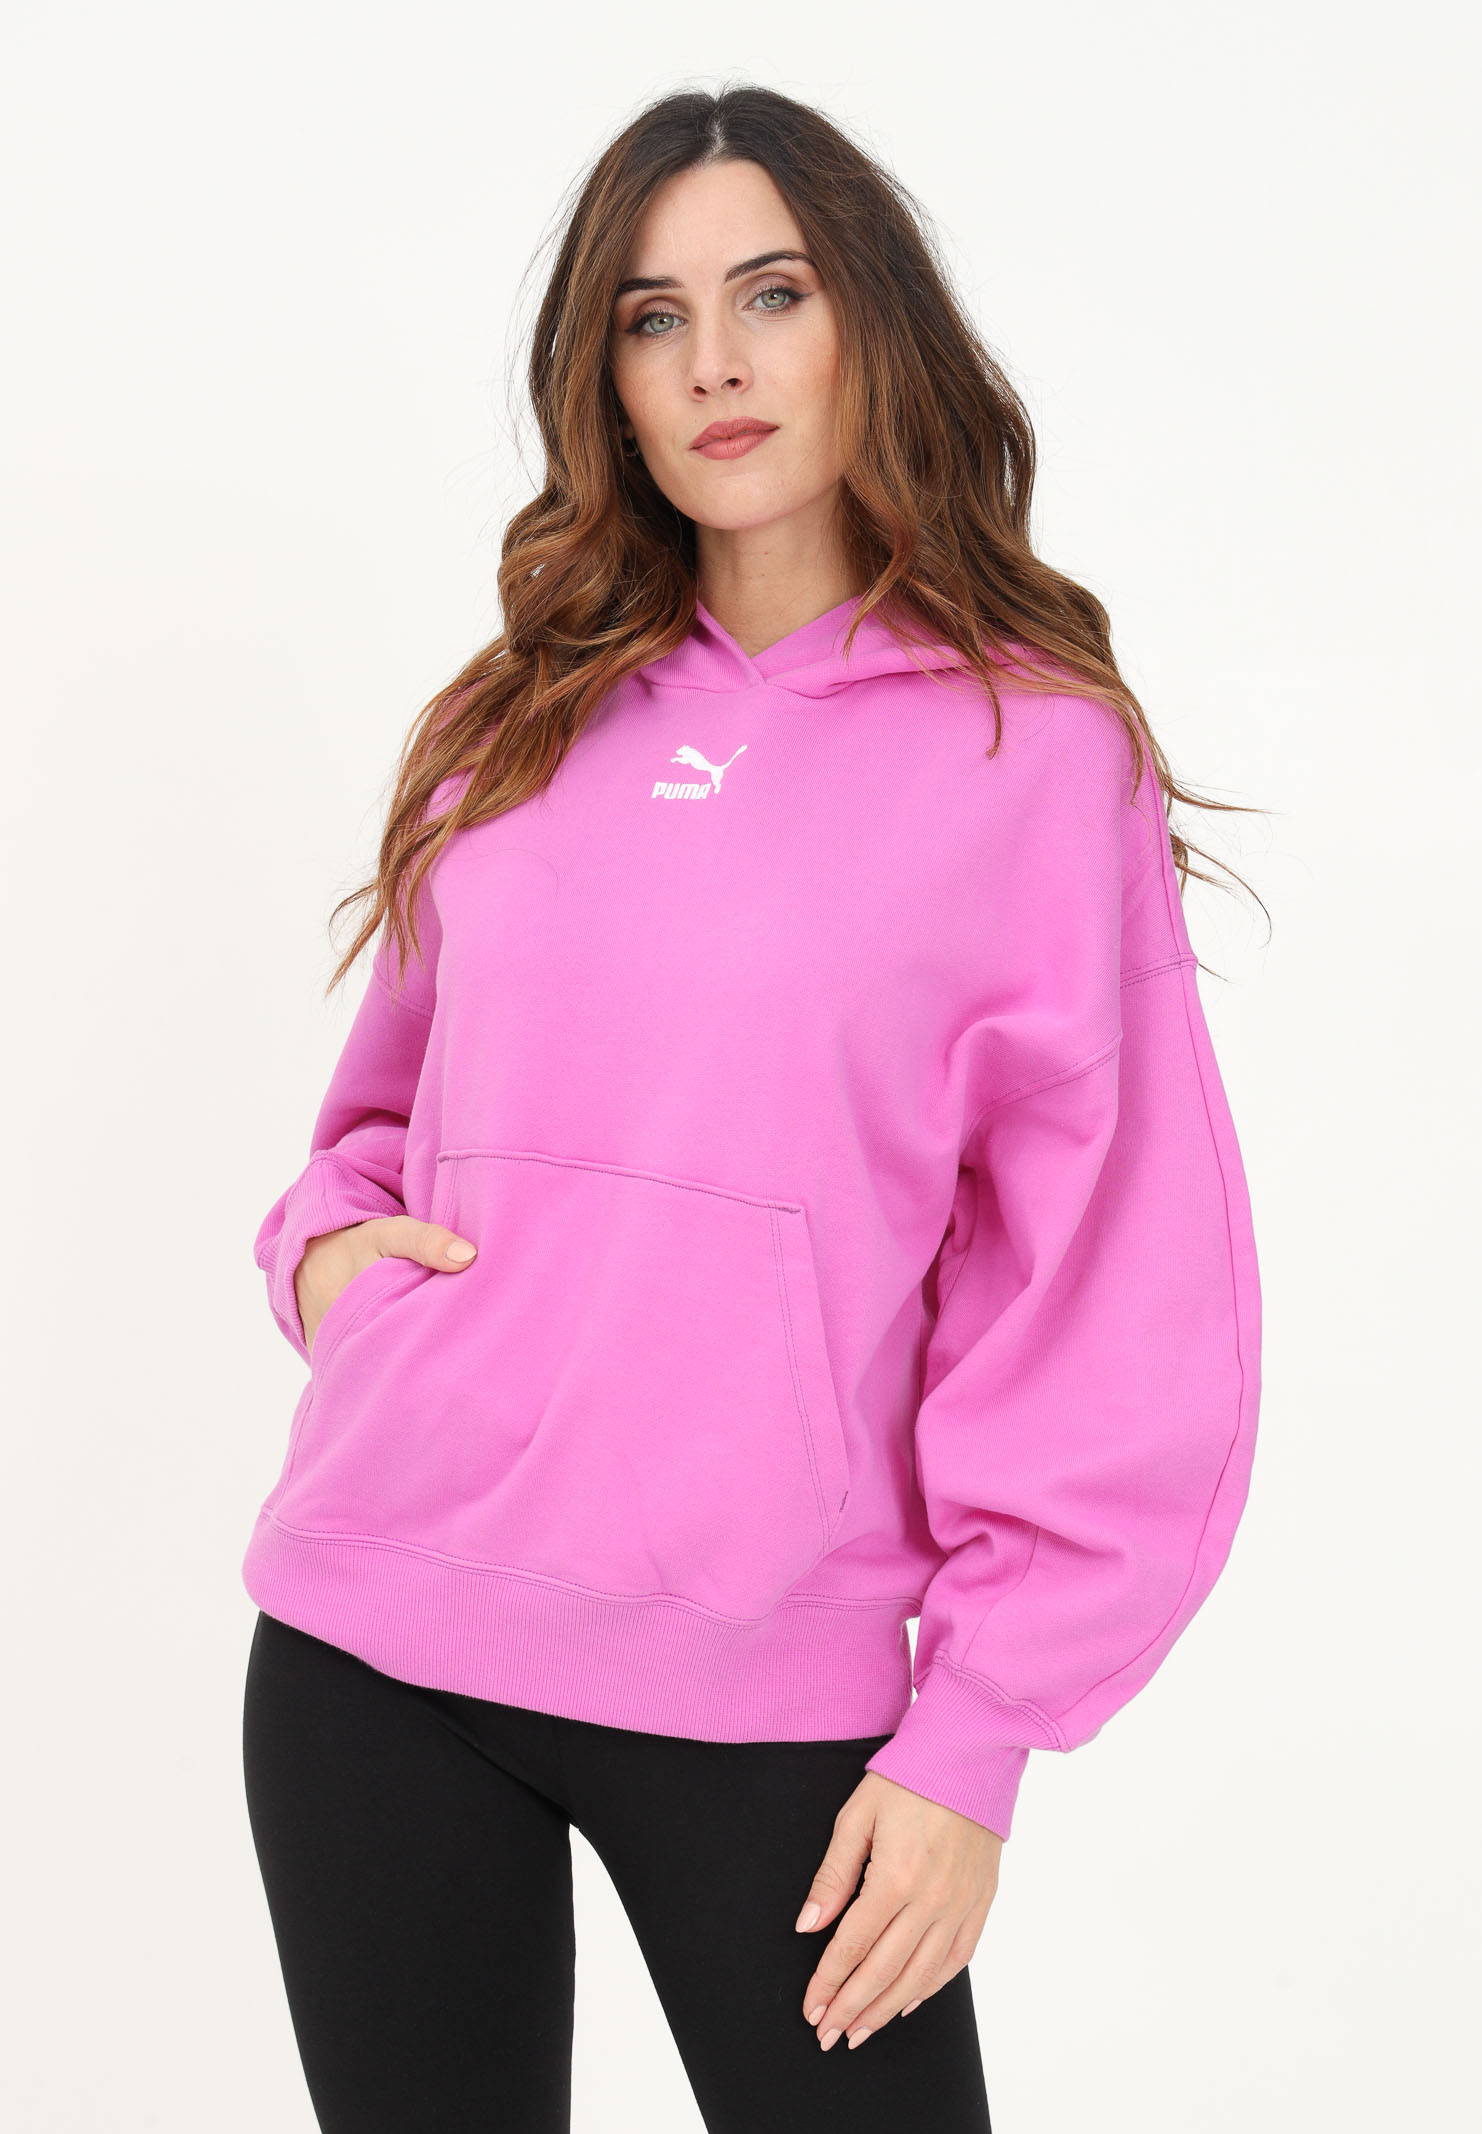 Fuchsia women's sweatshirt with hood and logo embroidery PUMA | 53568450